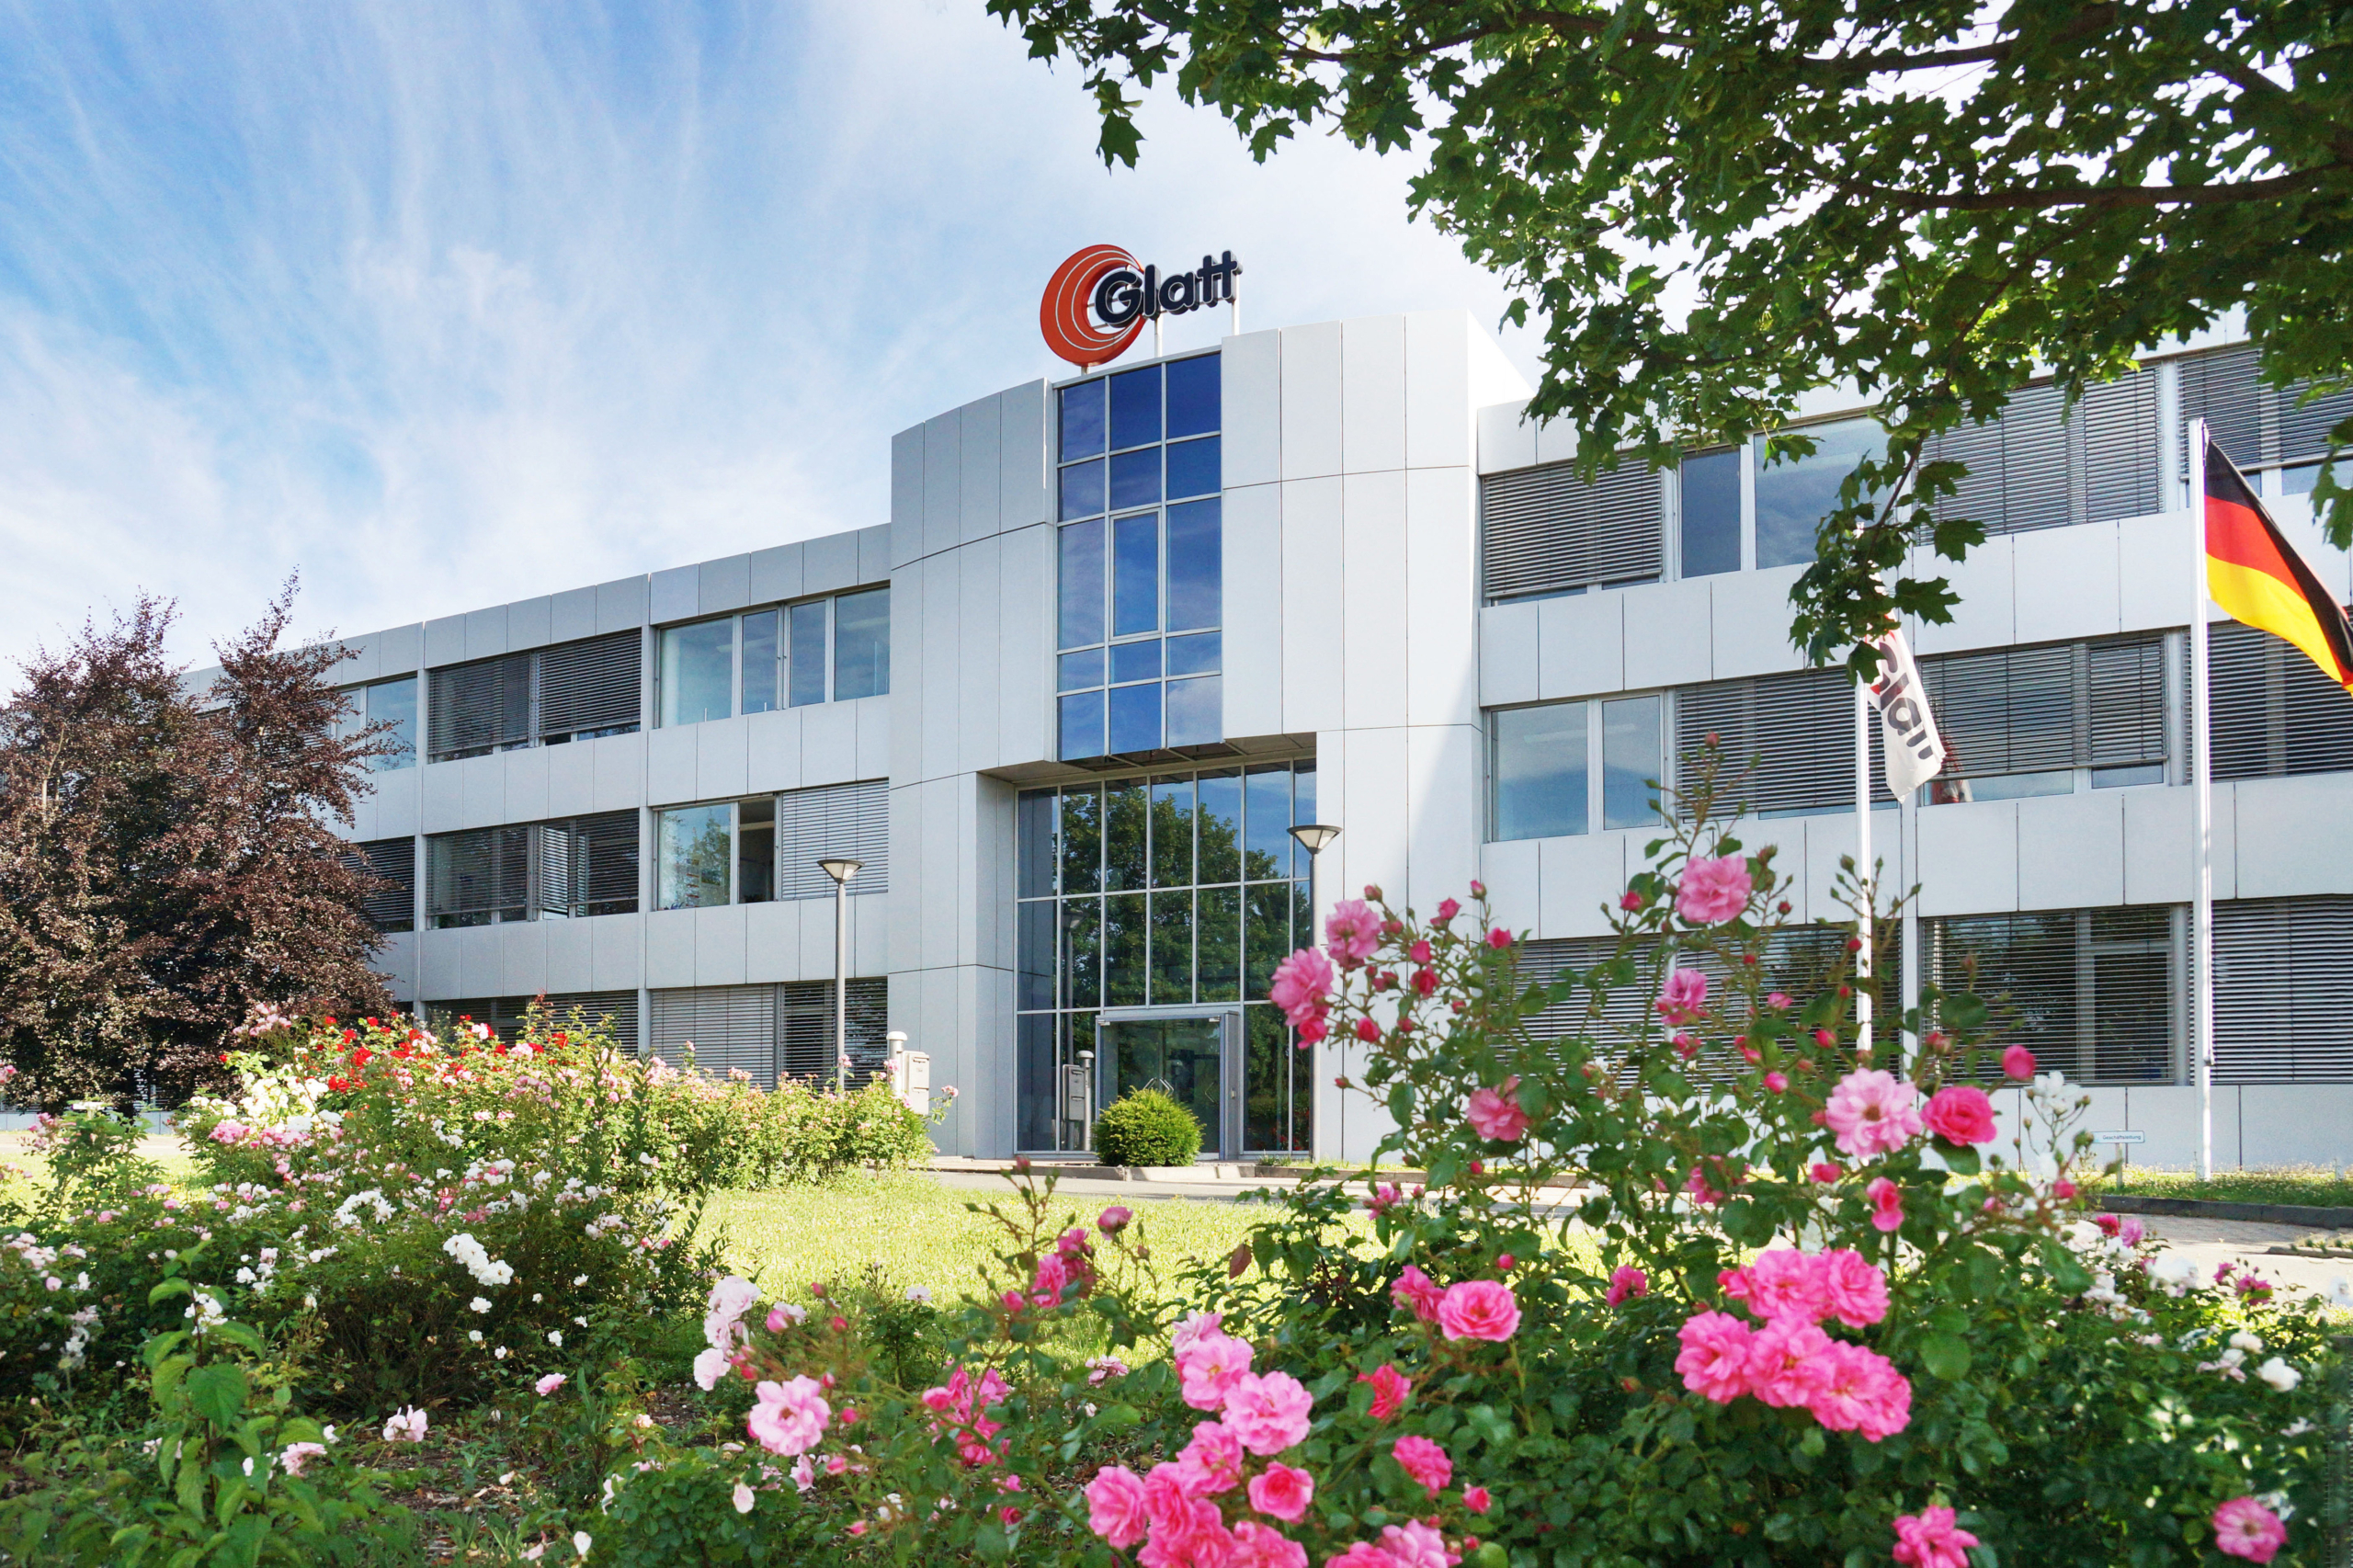 Glatt Ingenieurtechnik, company building at the company's headquarters in Weimar, Germany